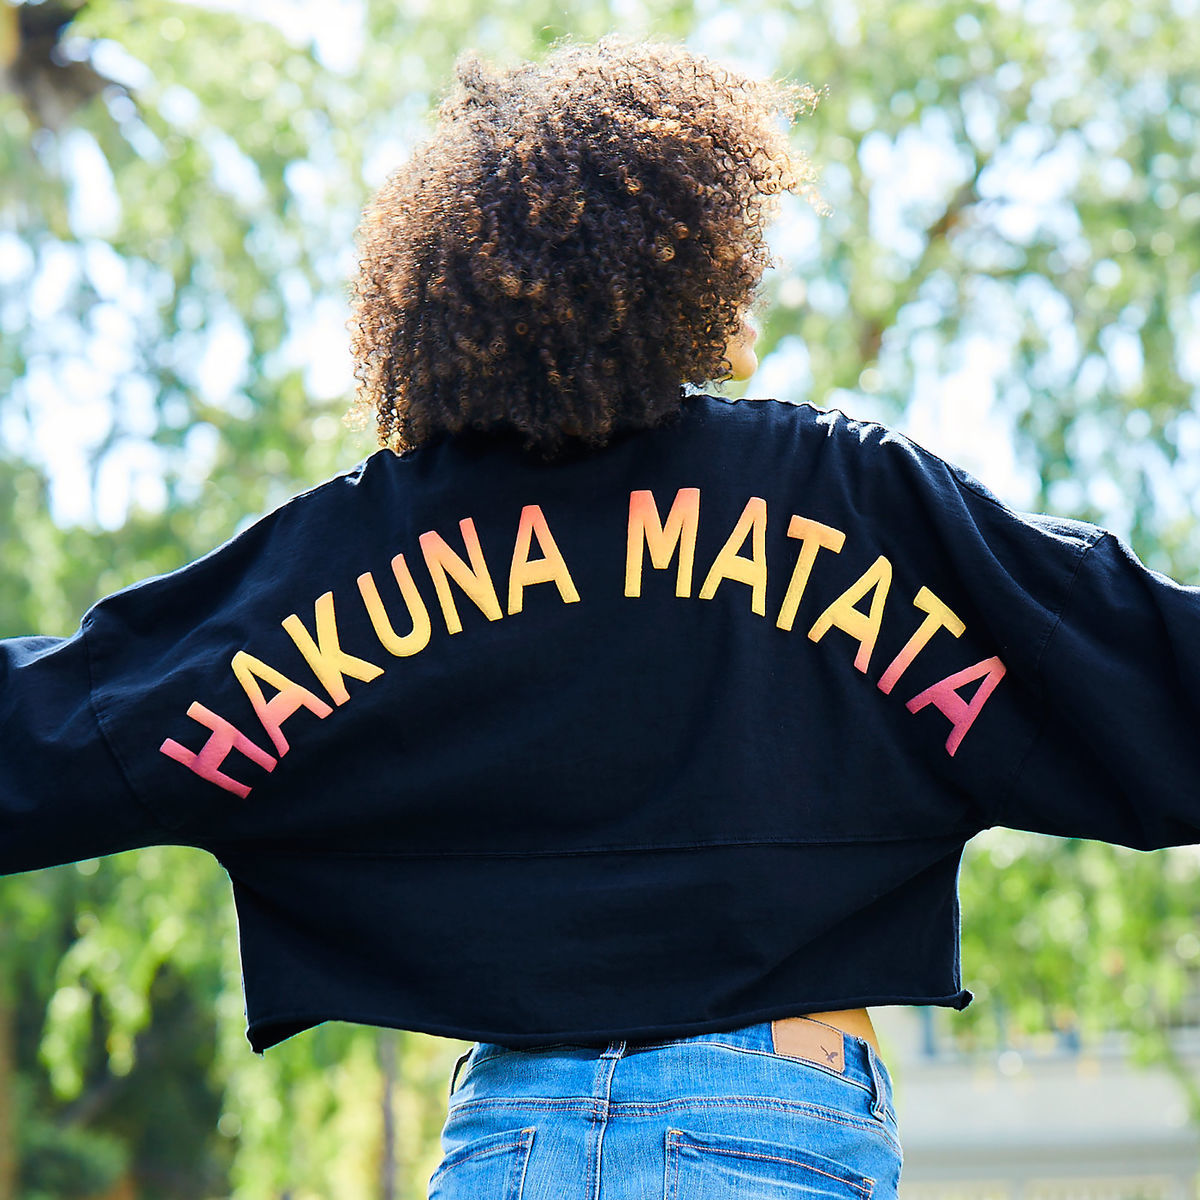 Hakuna Matata Spirit Jersey From shopDisney Means No Style Worries